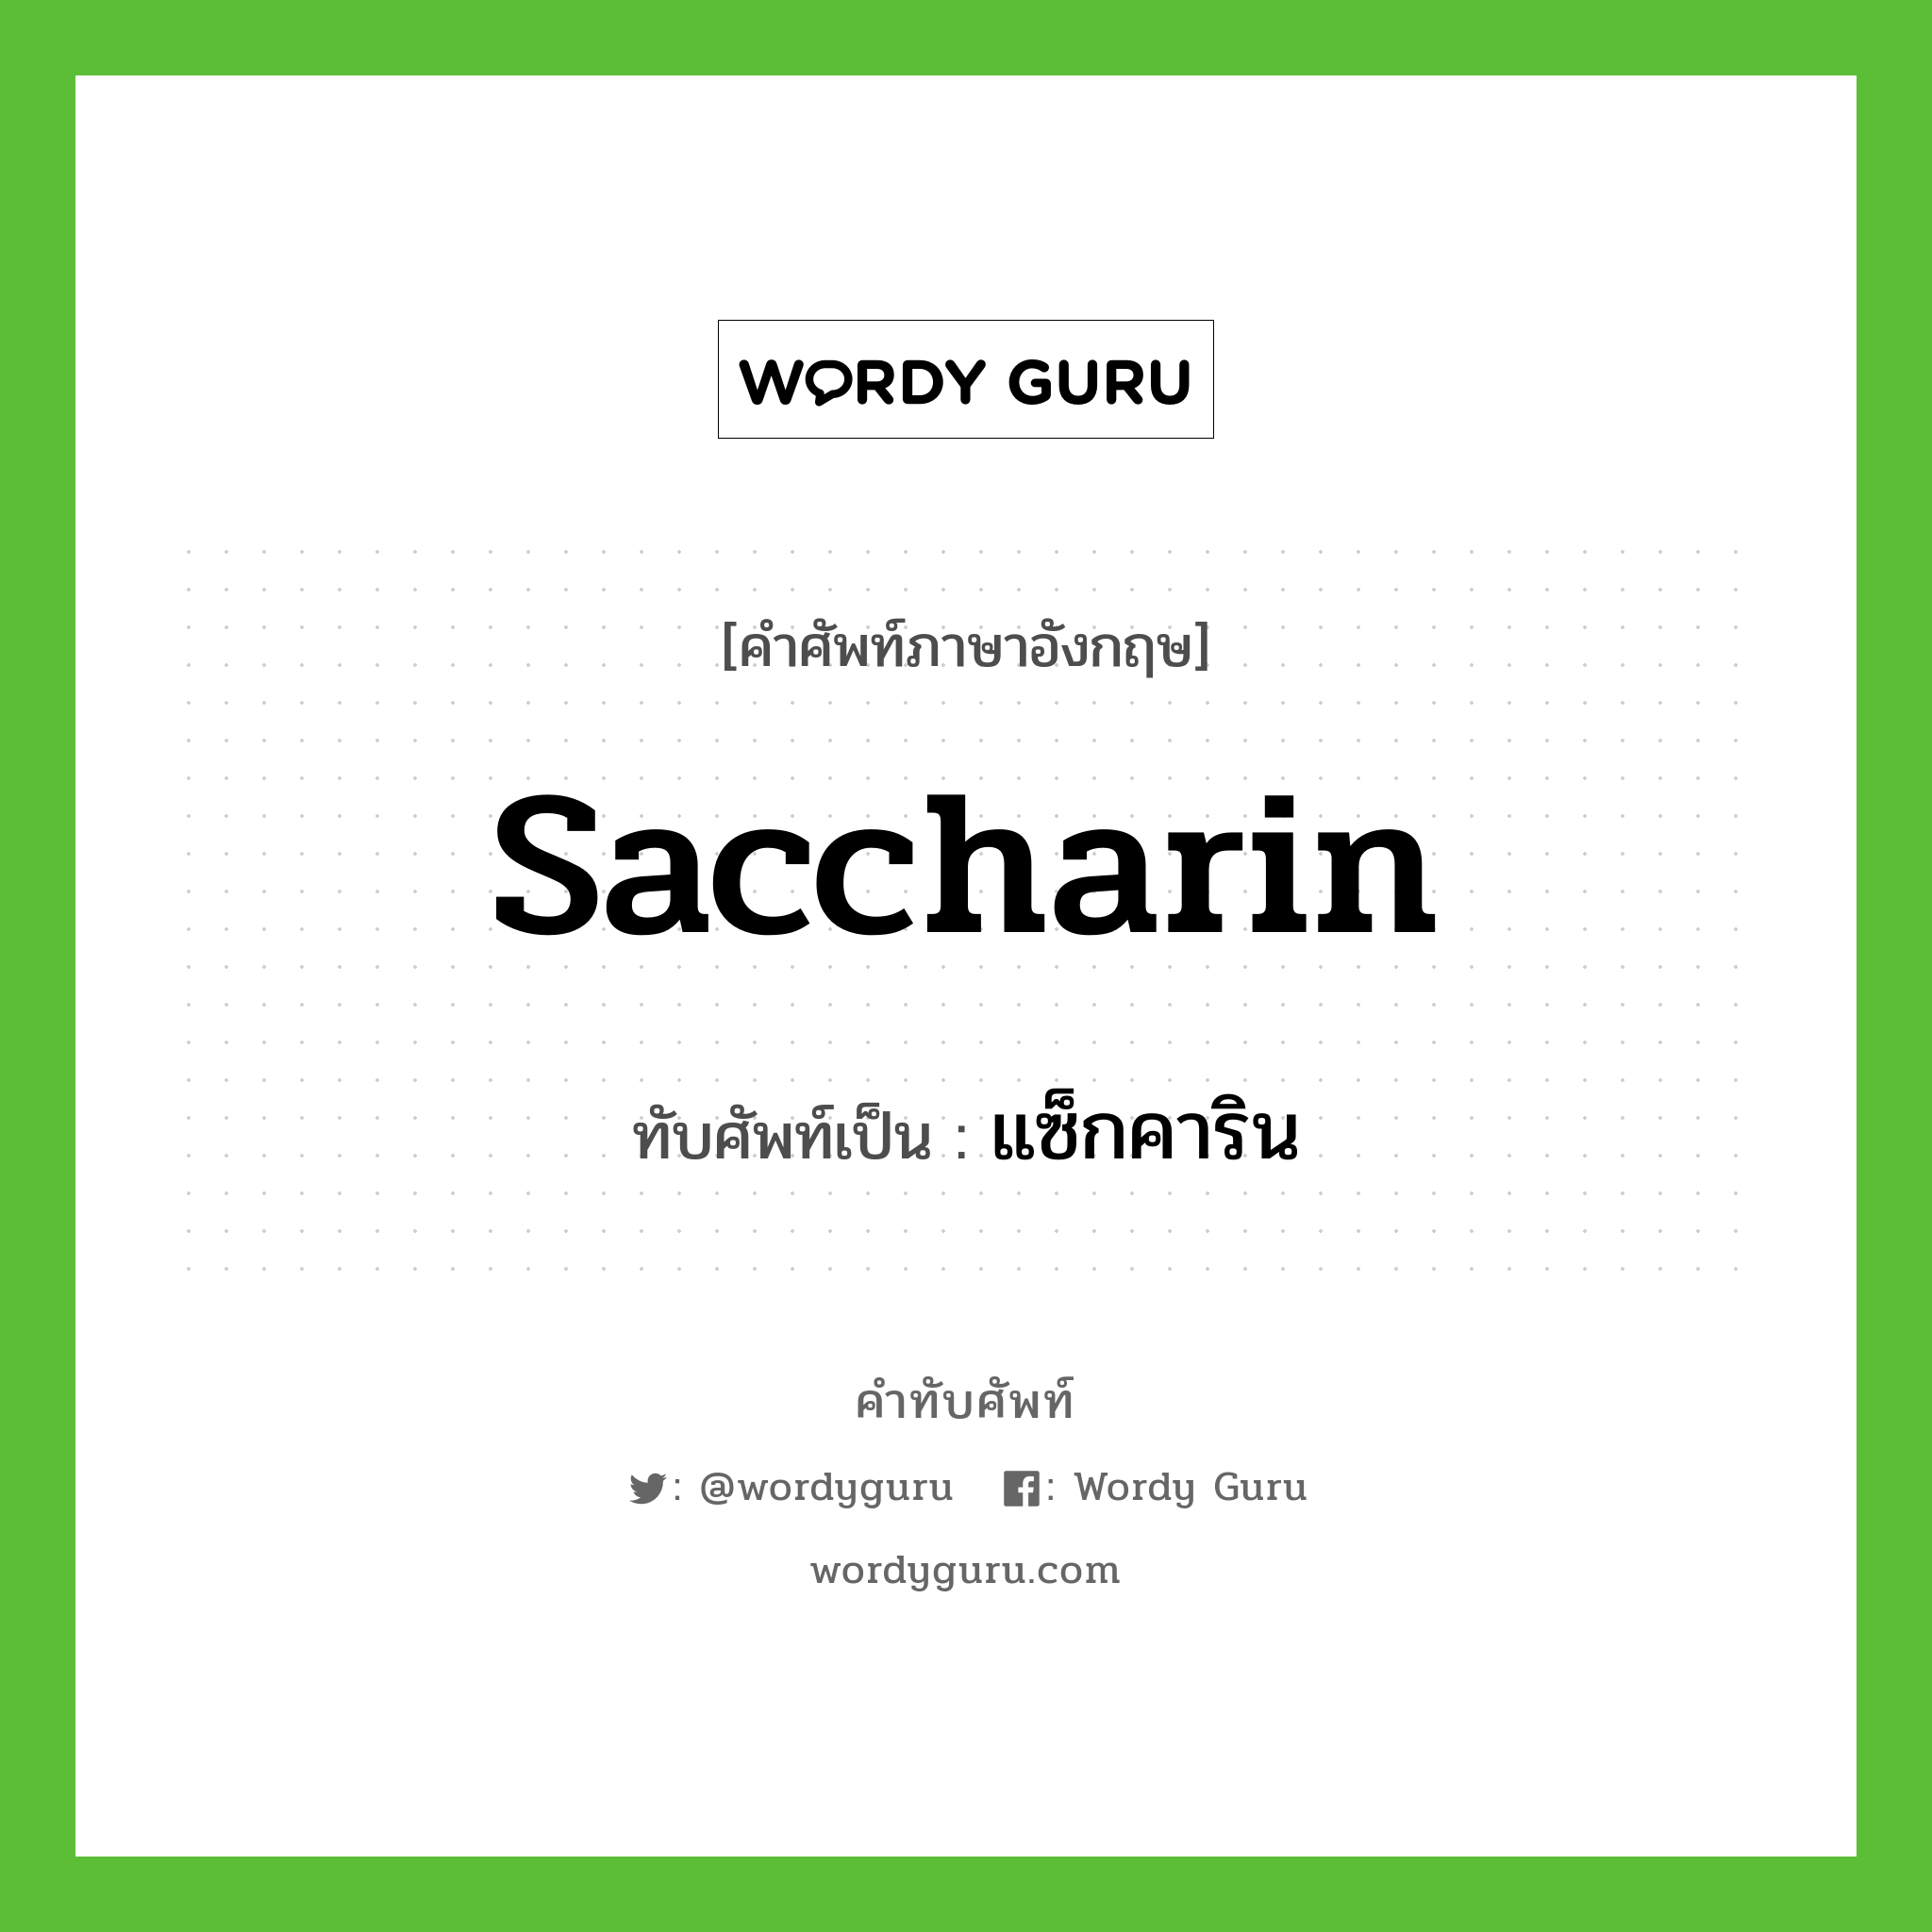 saccharin เขียนเป็นคำไทยว่าอะไร?, คำศัพท์ภาษาอังกฤษ saccharin ทับศัพท์เป็น แซ็กคาริน